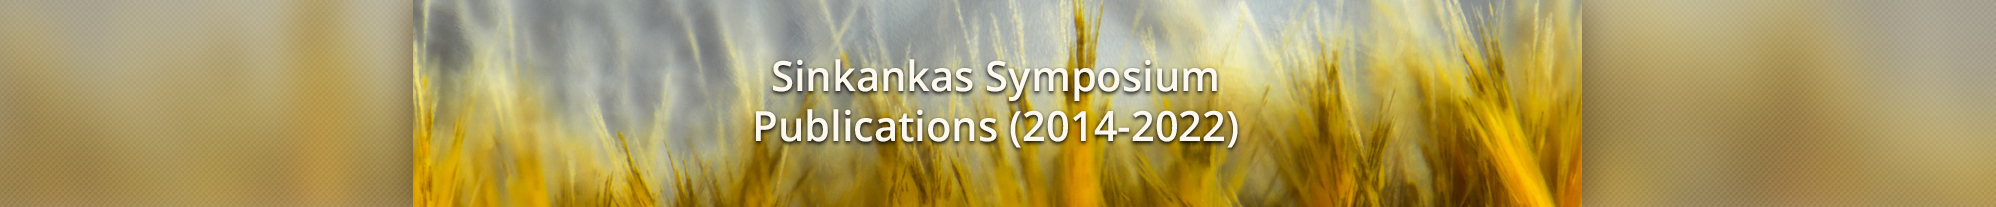 Sinkankas Symposium Publications (2014-2022)